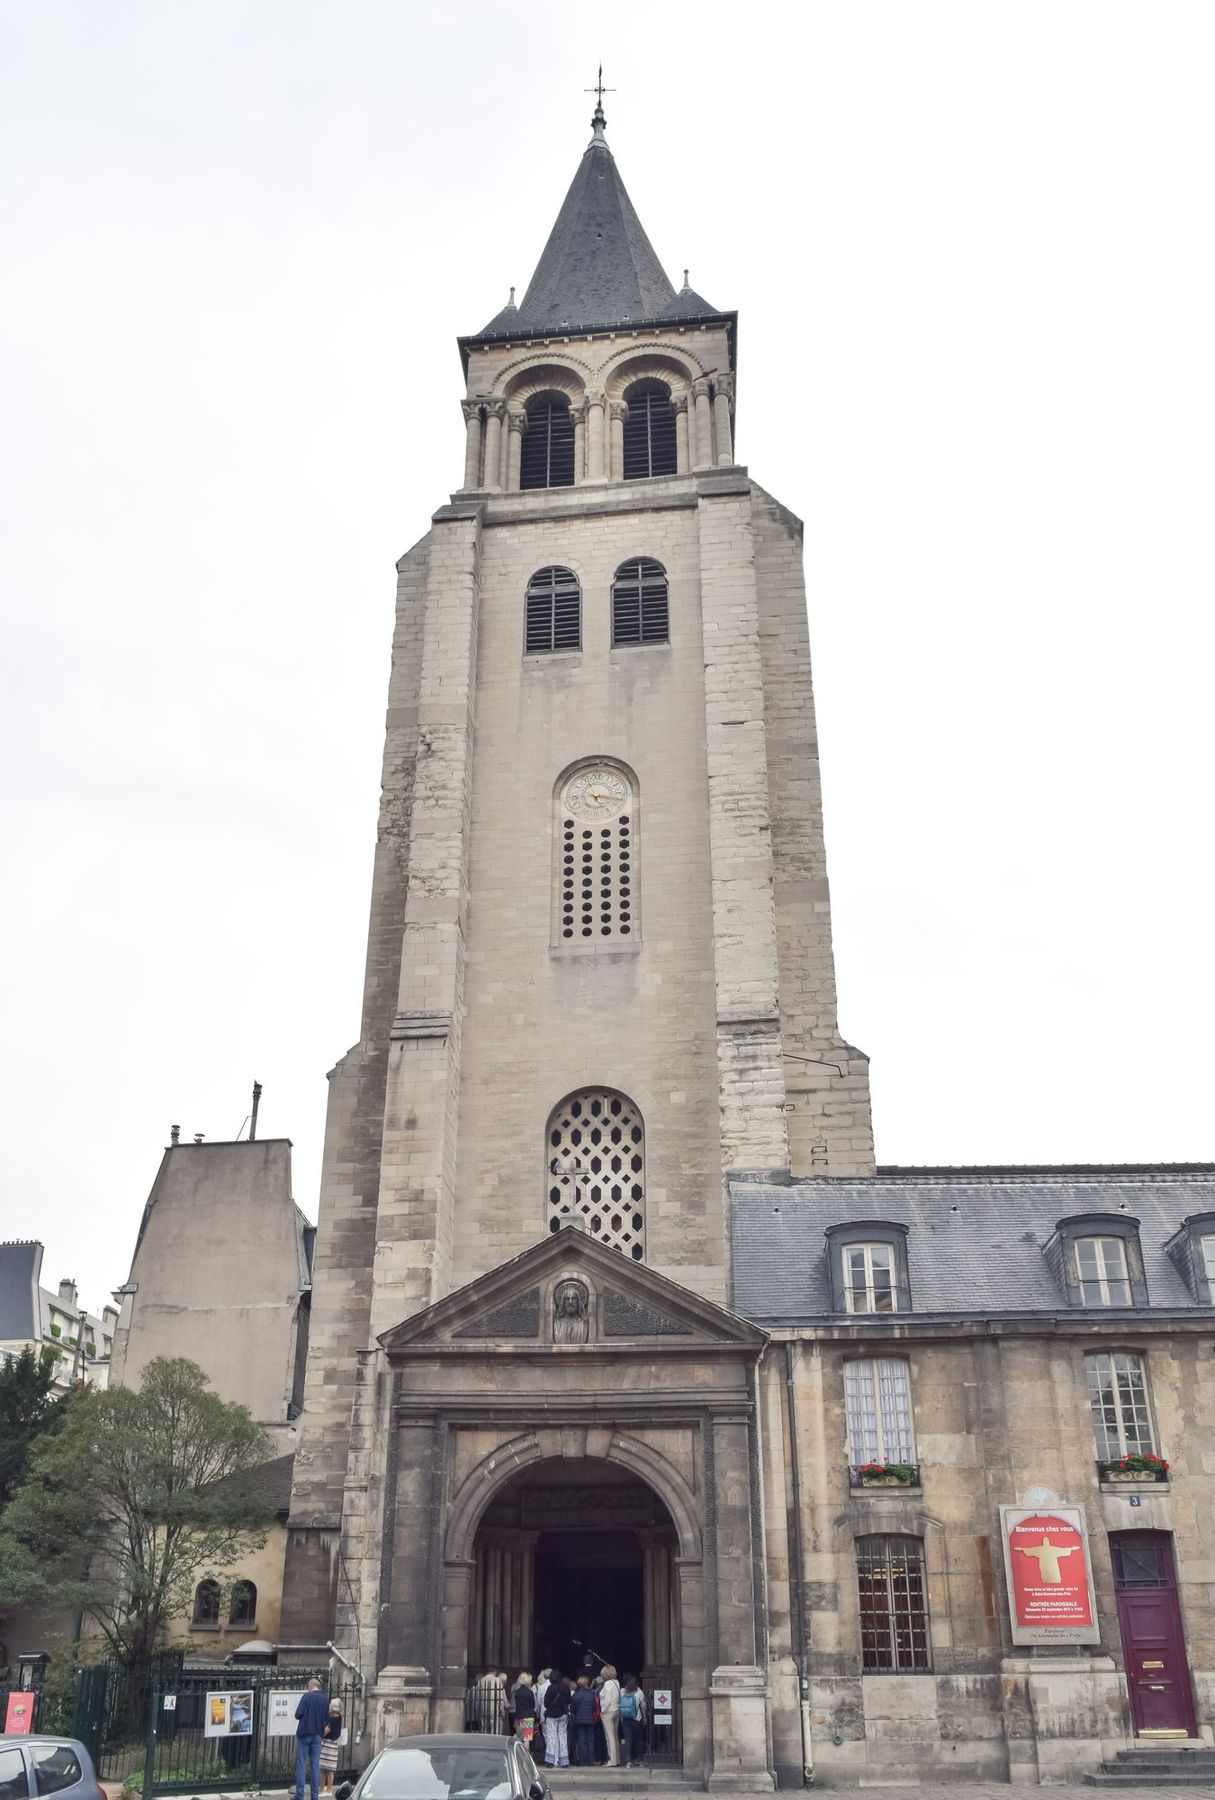 Saint-Germain-des-Près Church